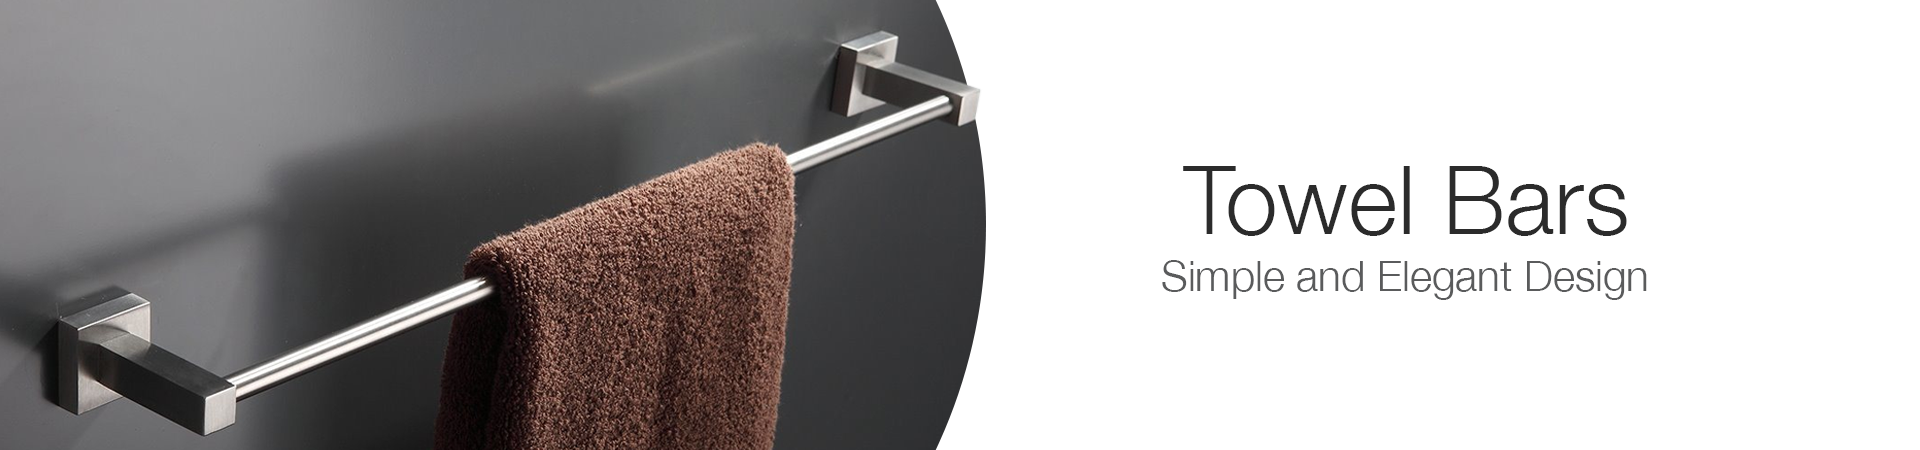 Towel Bars - Simple and Elegant - Bathroom Accessories